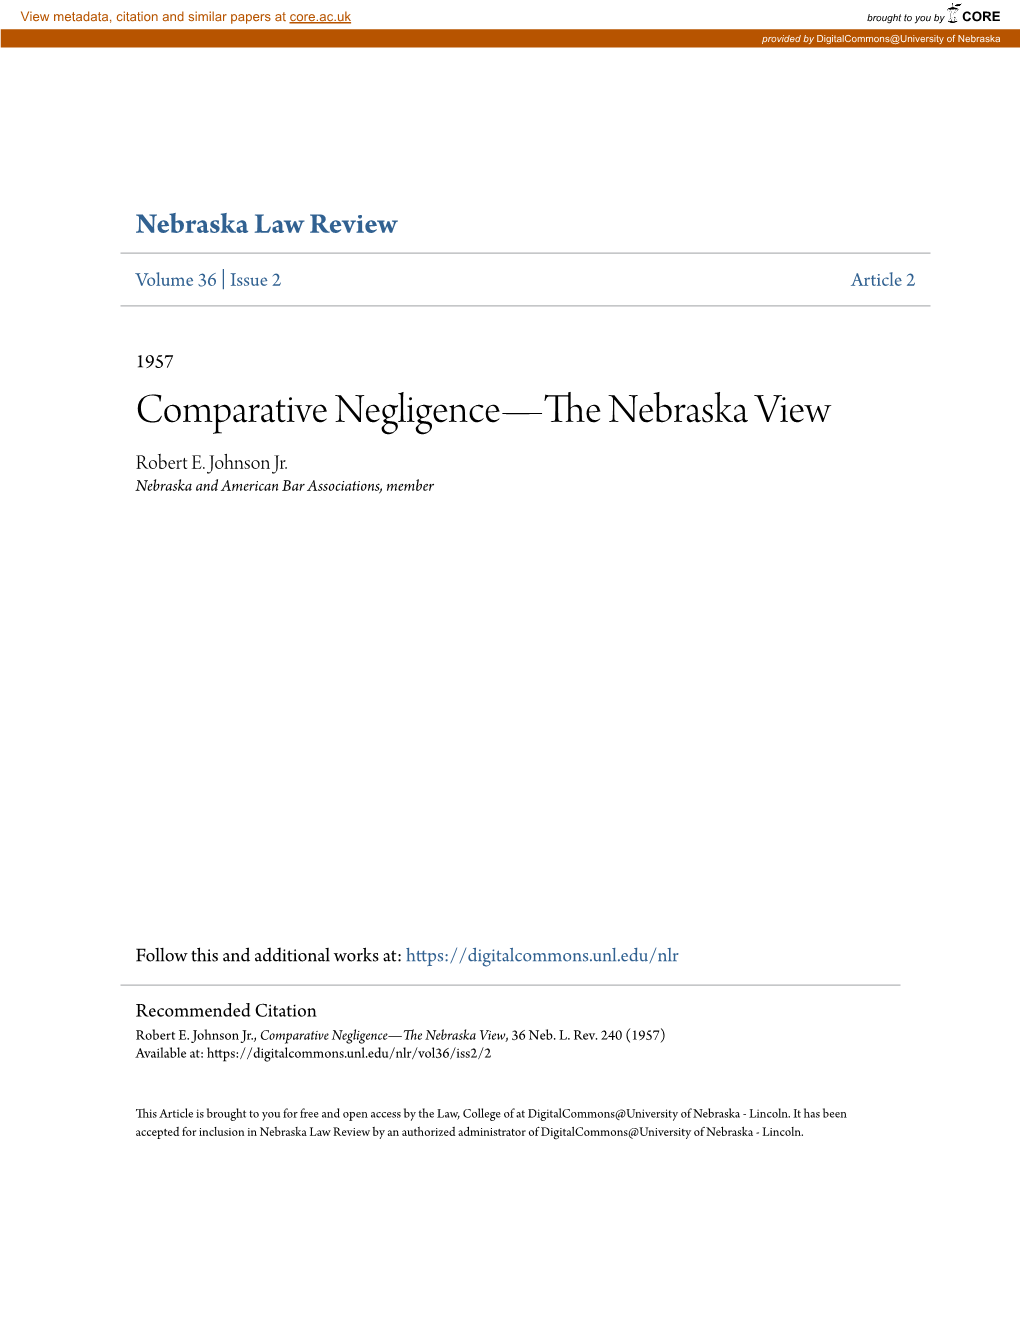 Comparative Negligence—The Nebraska View, 36 Neb